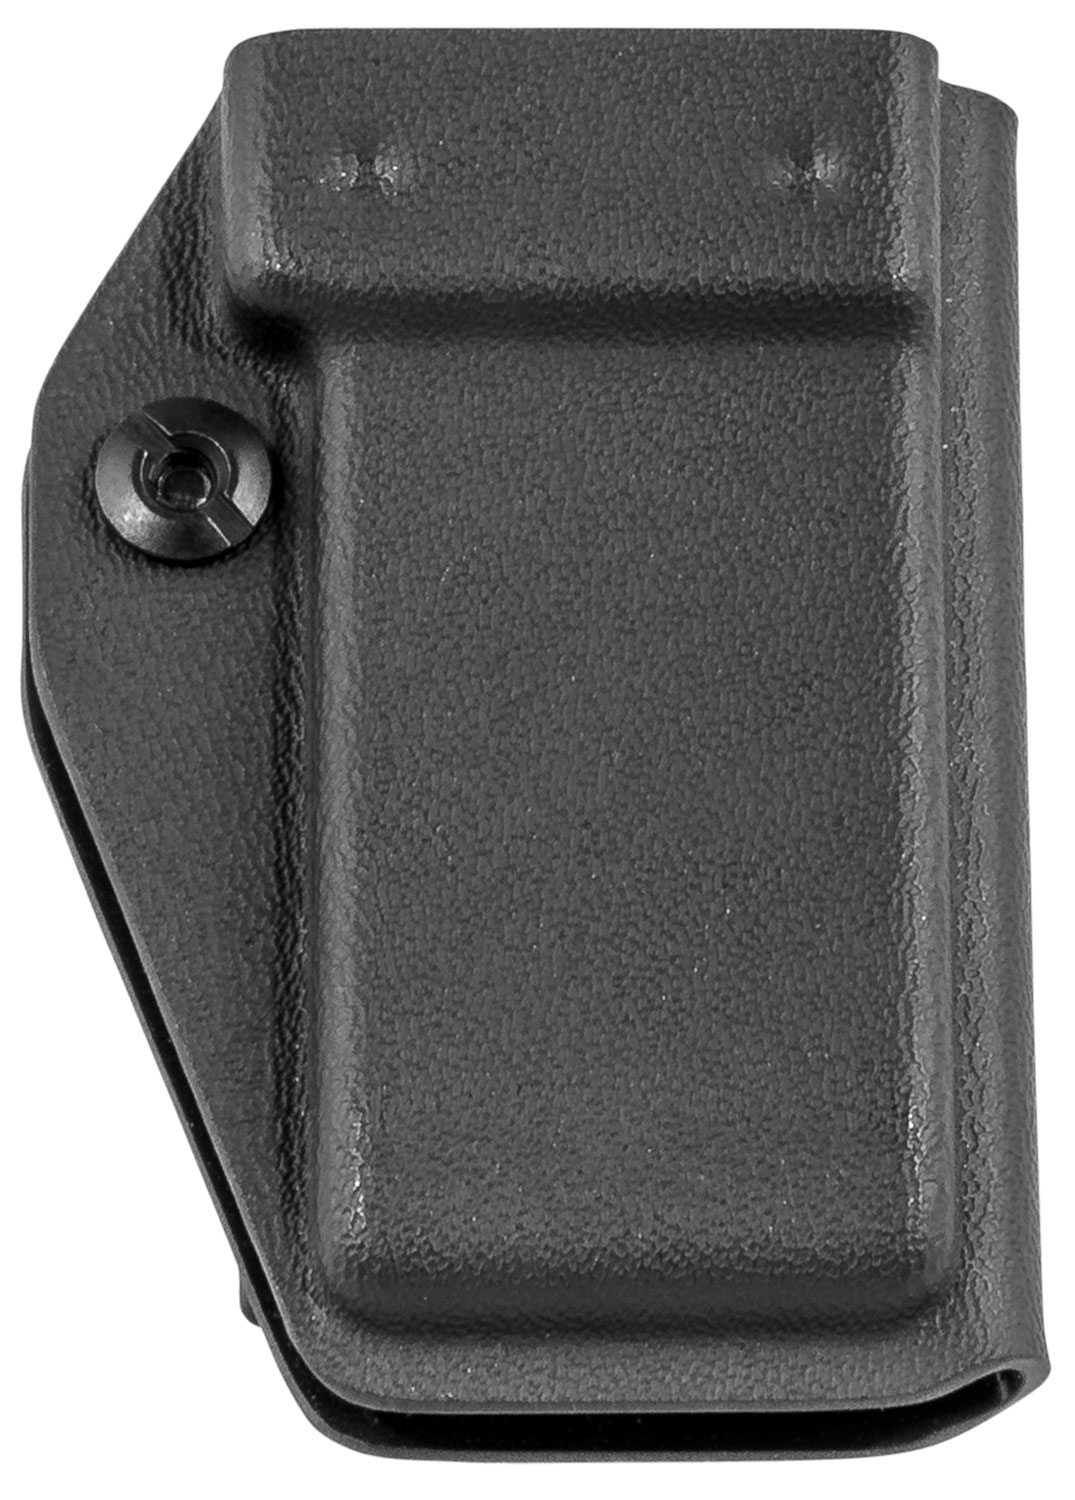 C&G Holsters 249100 Universal  IWB/OWB Black Single Kydex Belt Clip Compatible w/Glock 43 Belts 1.75